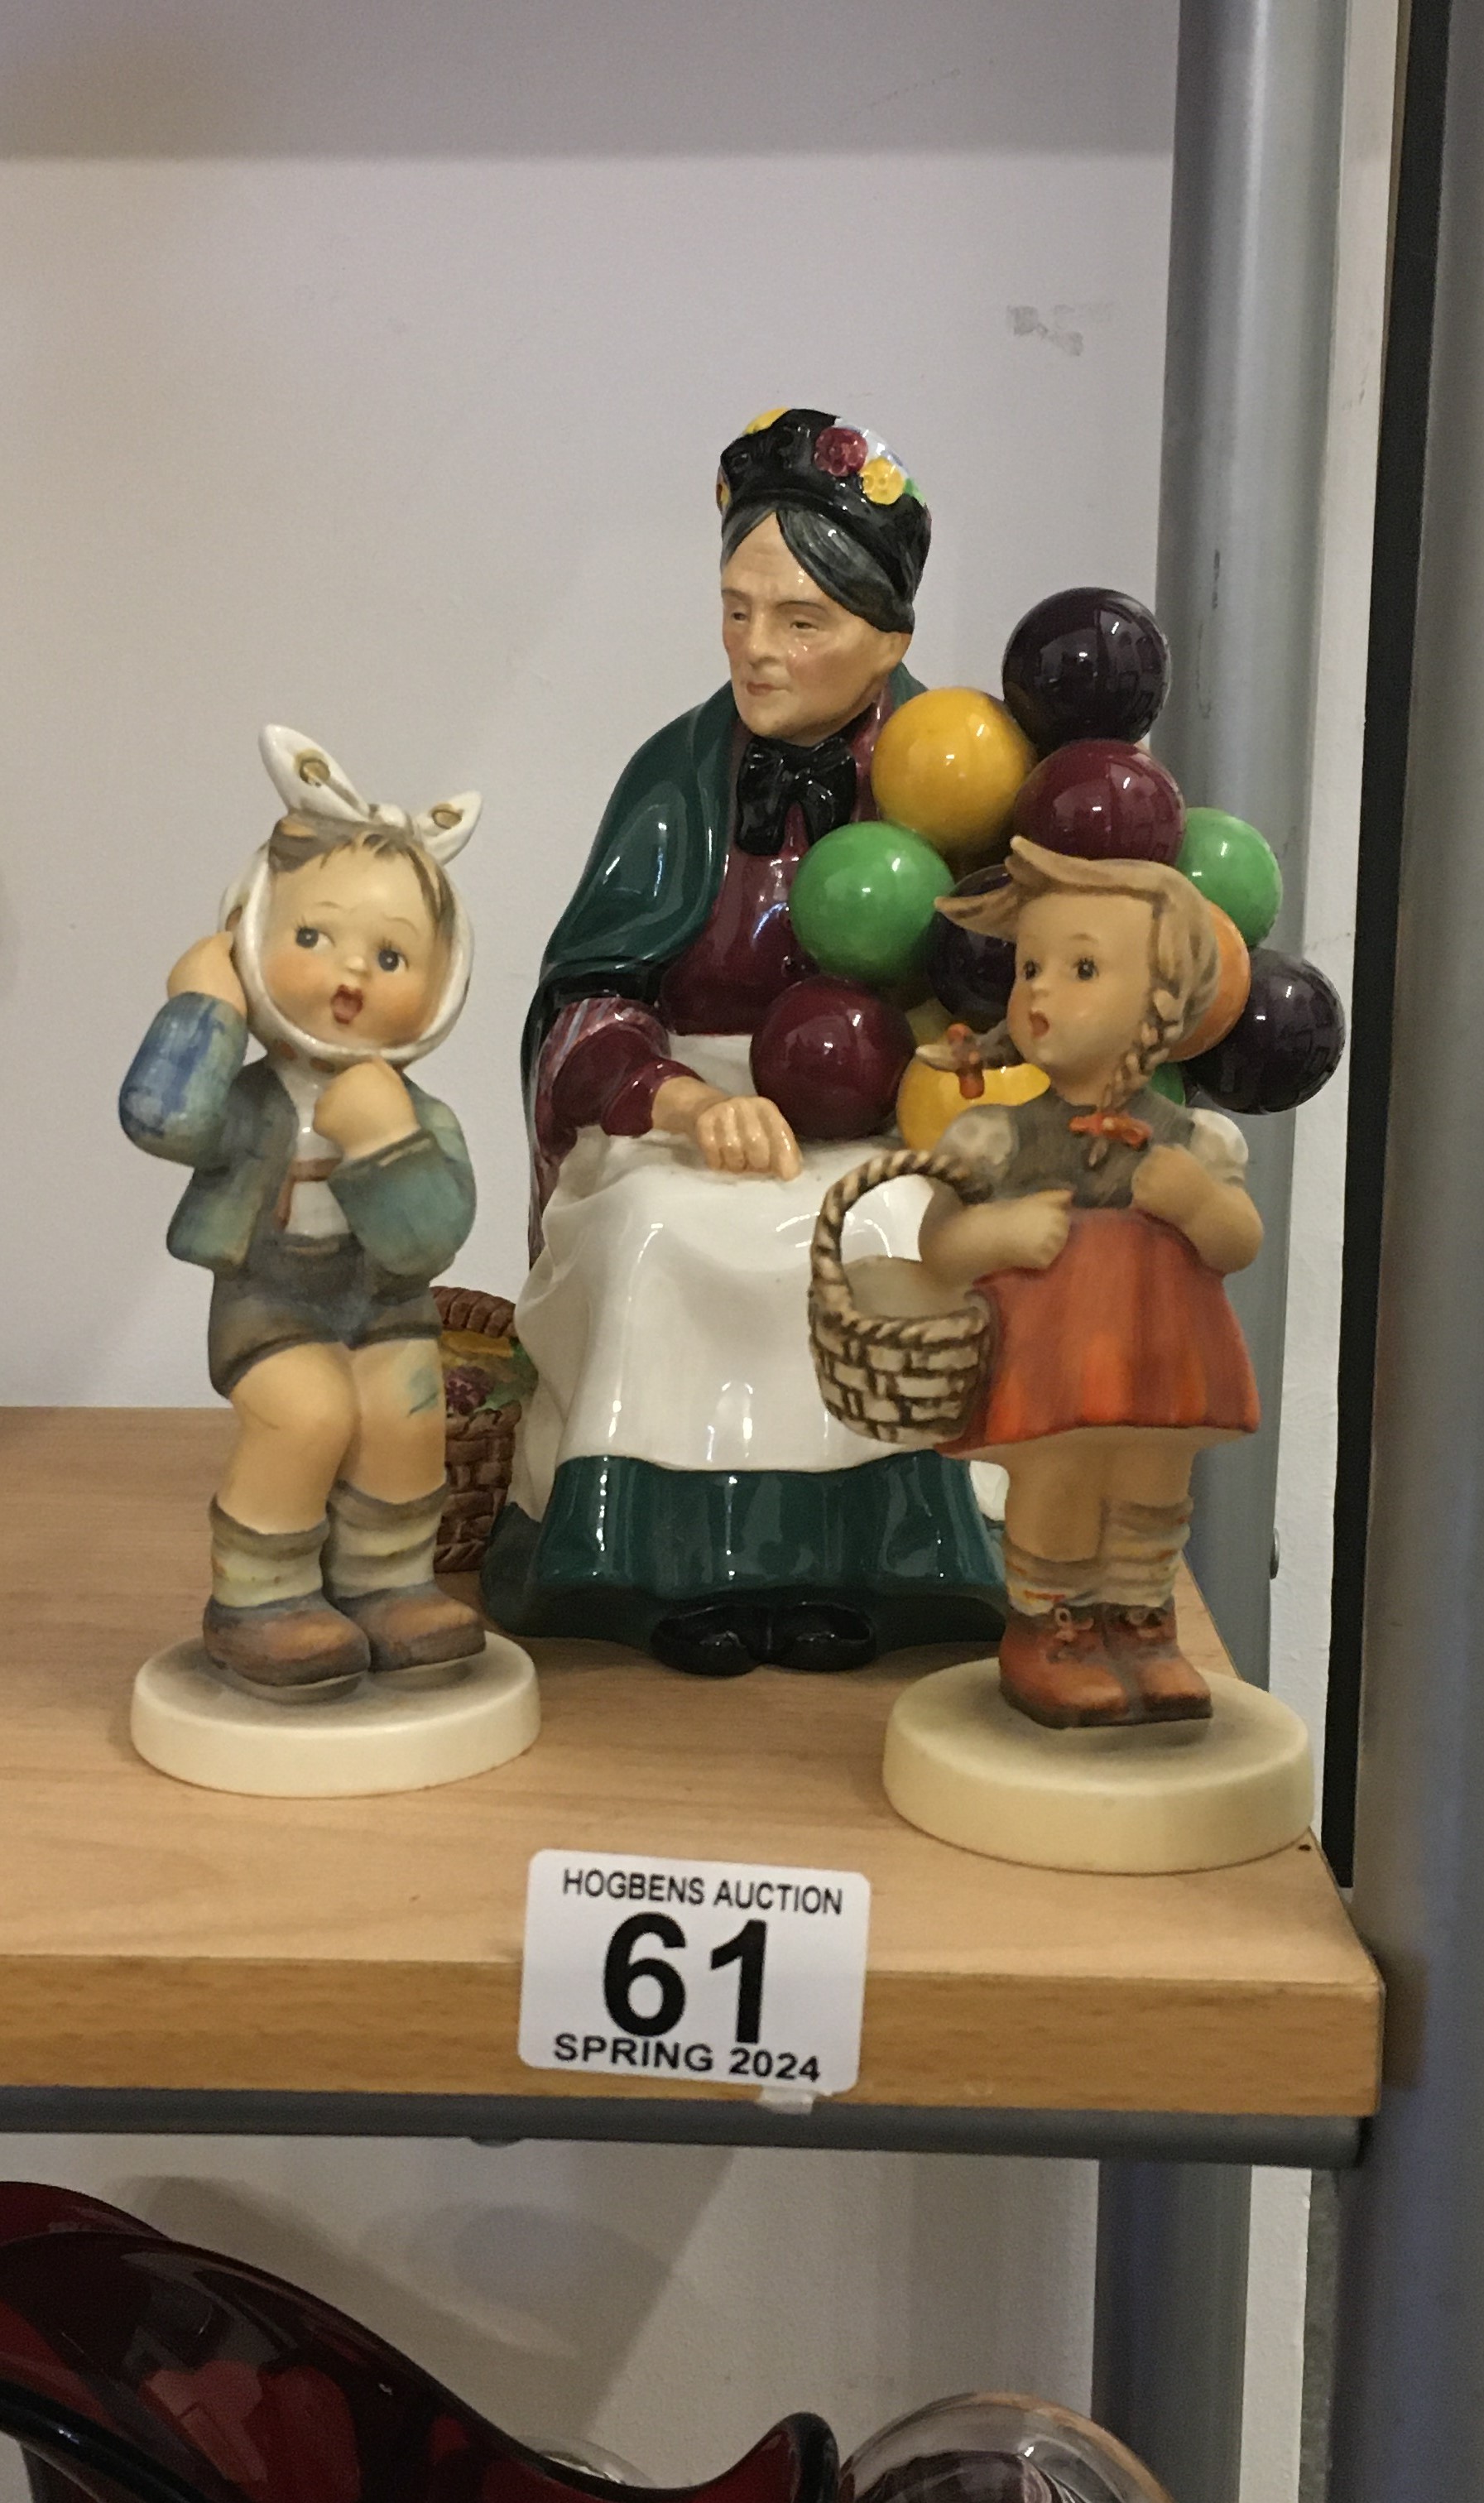 2 x Hummel figurines and 1 Doulton figurine Balloon seller